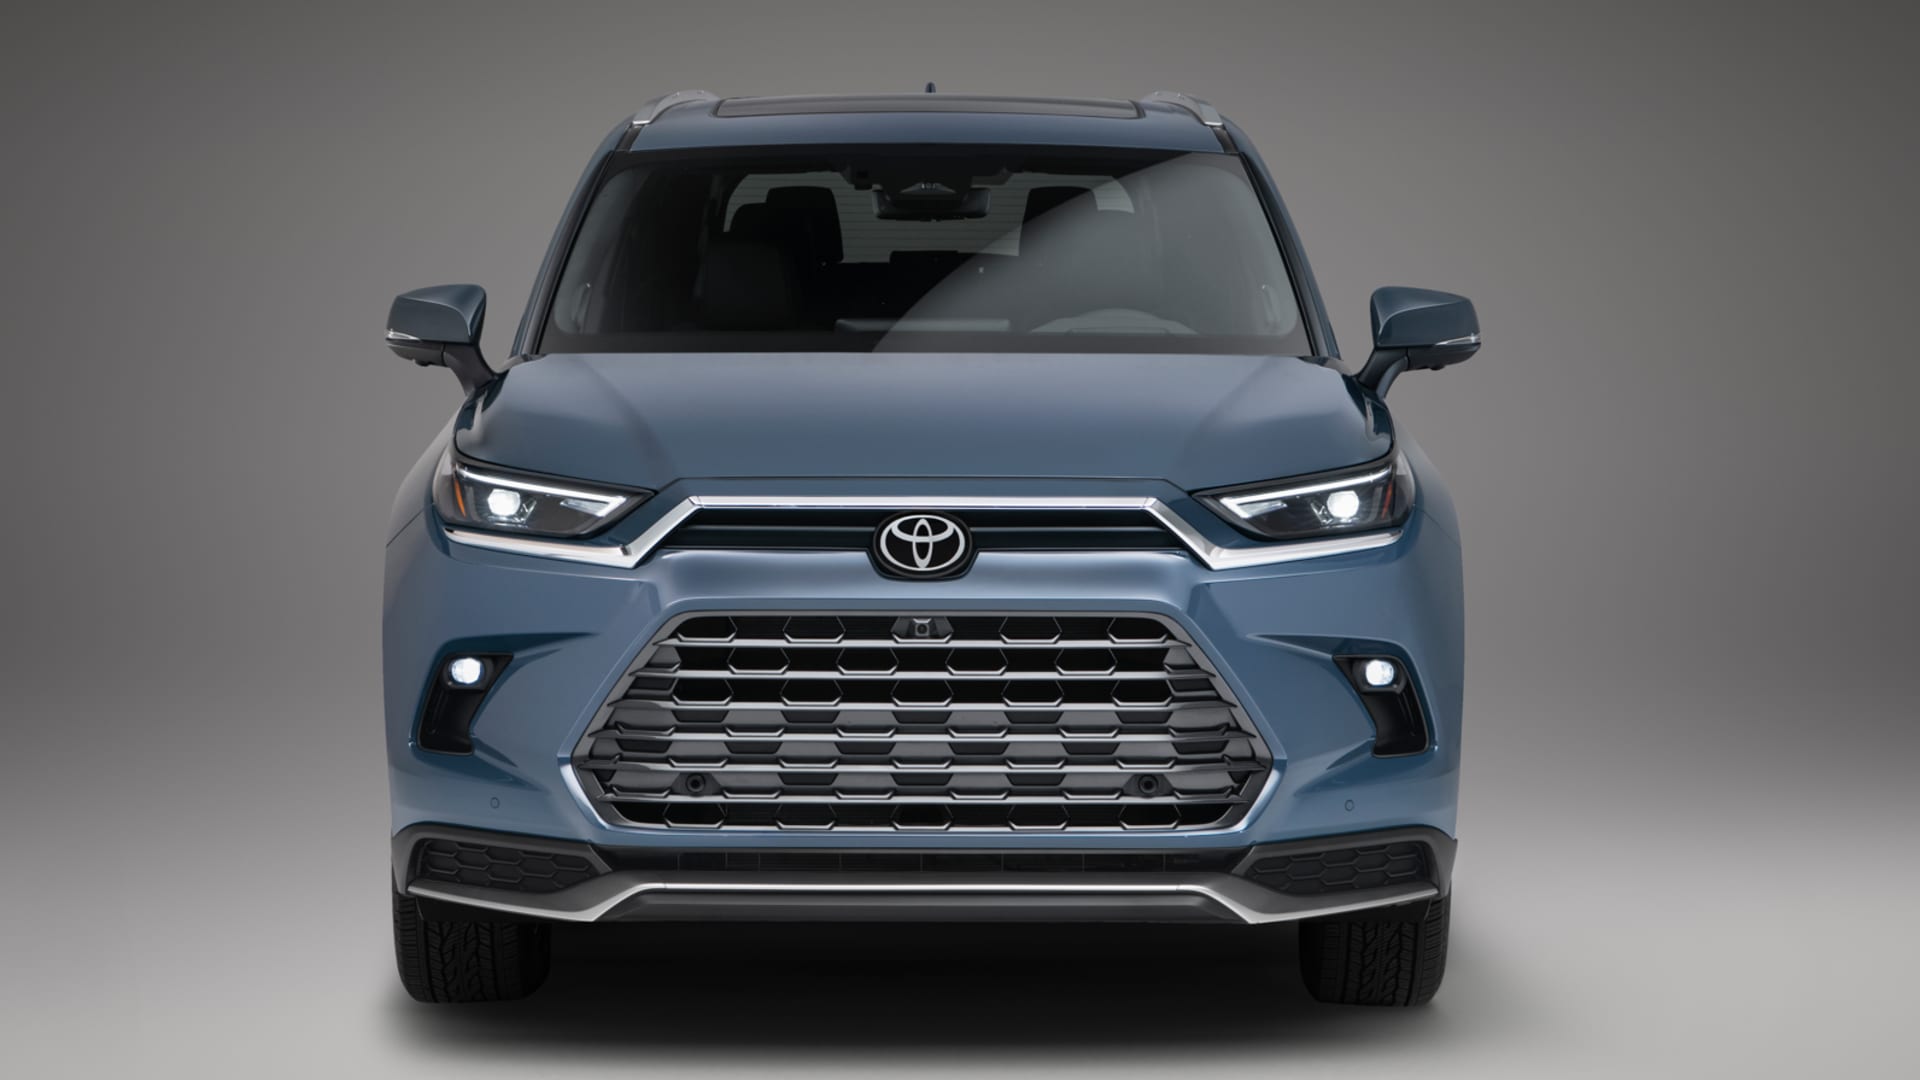 Toyota unveils new Grand Highlander, expanding hybrid crossover lineup